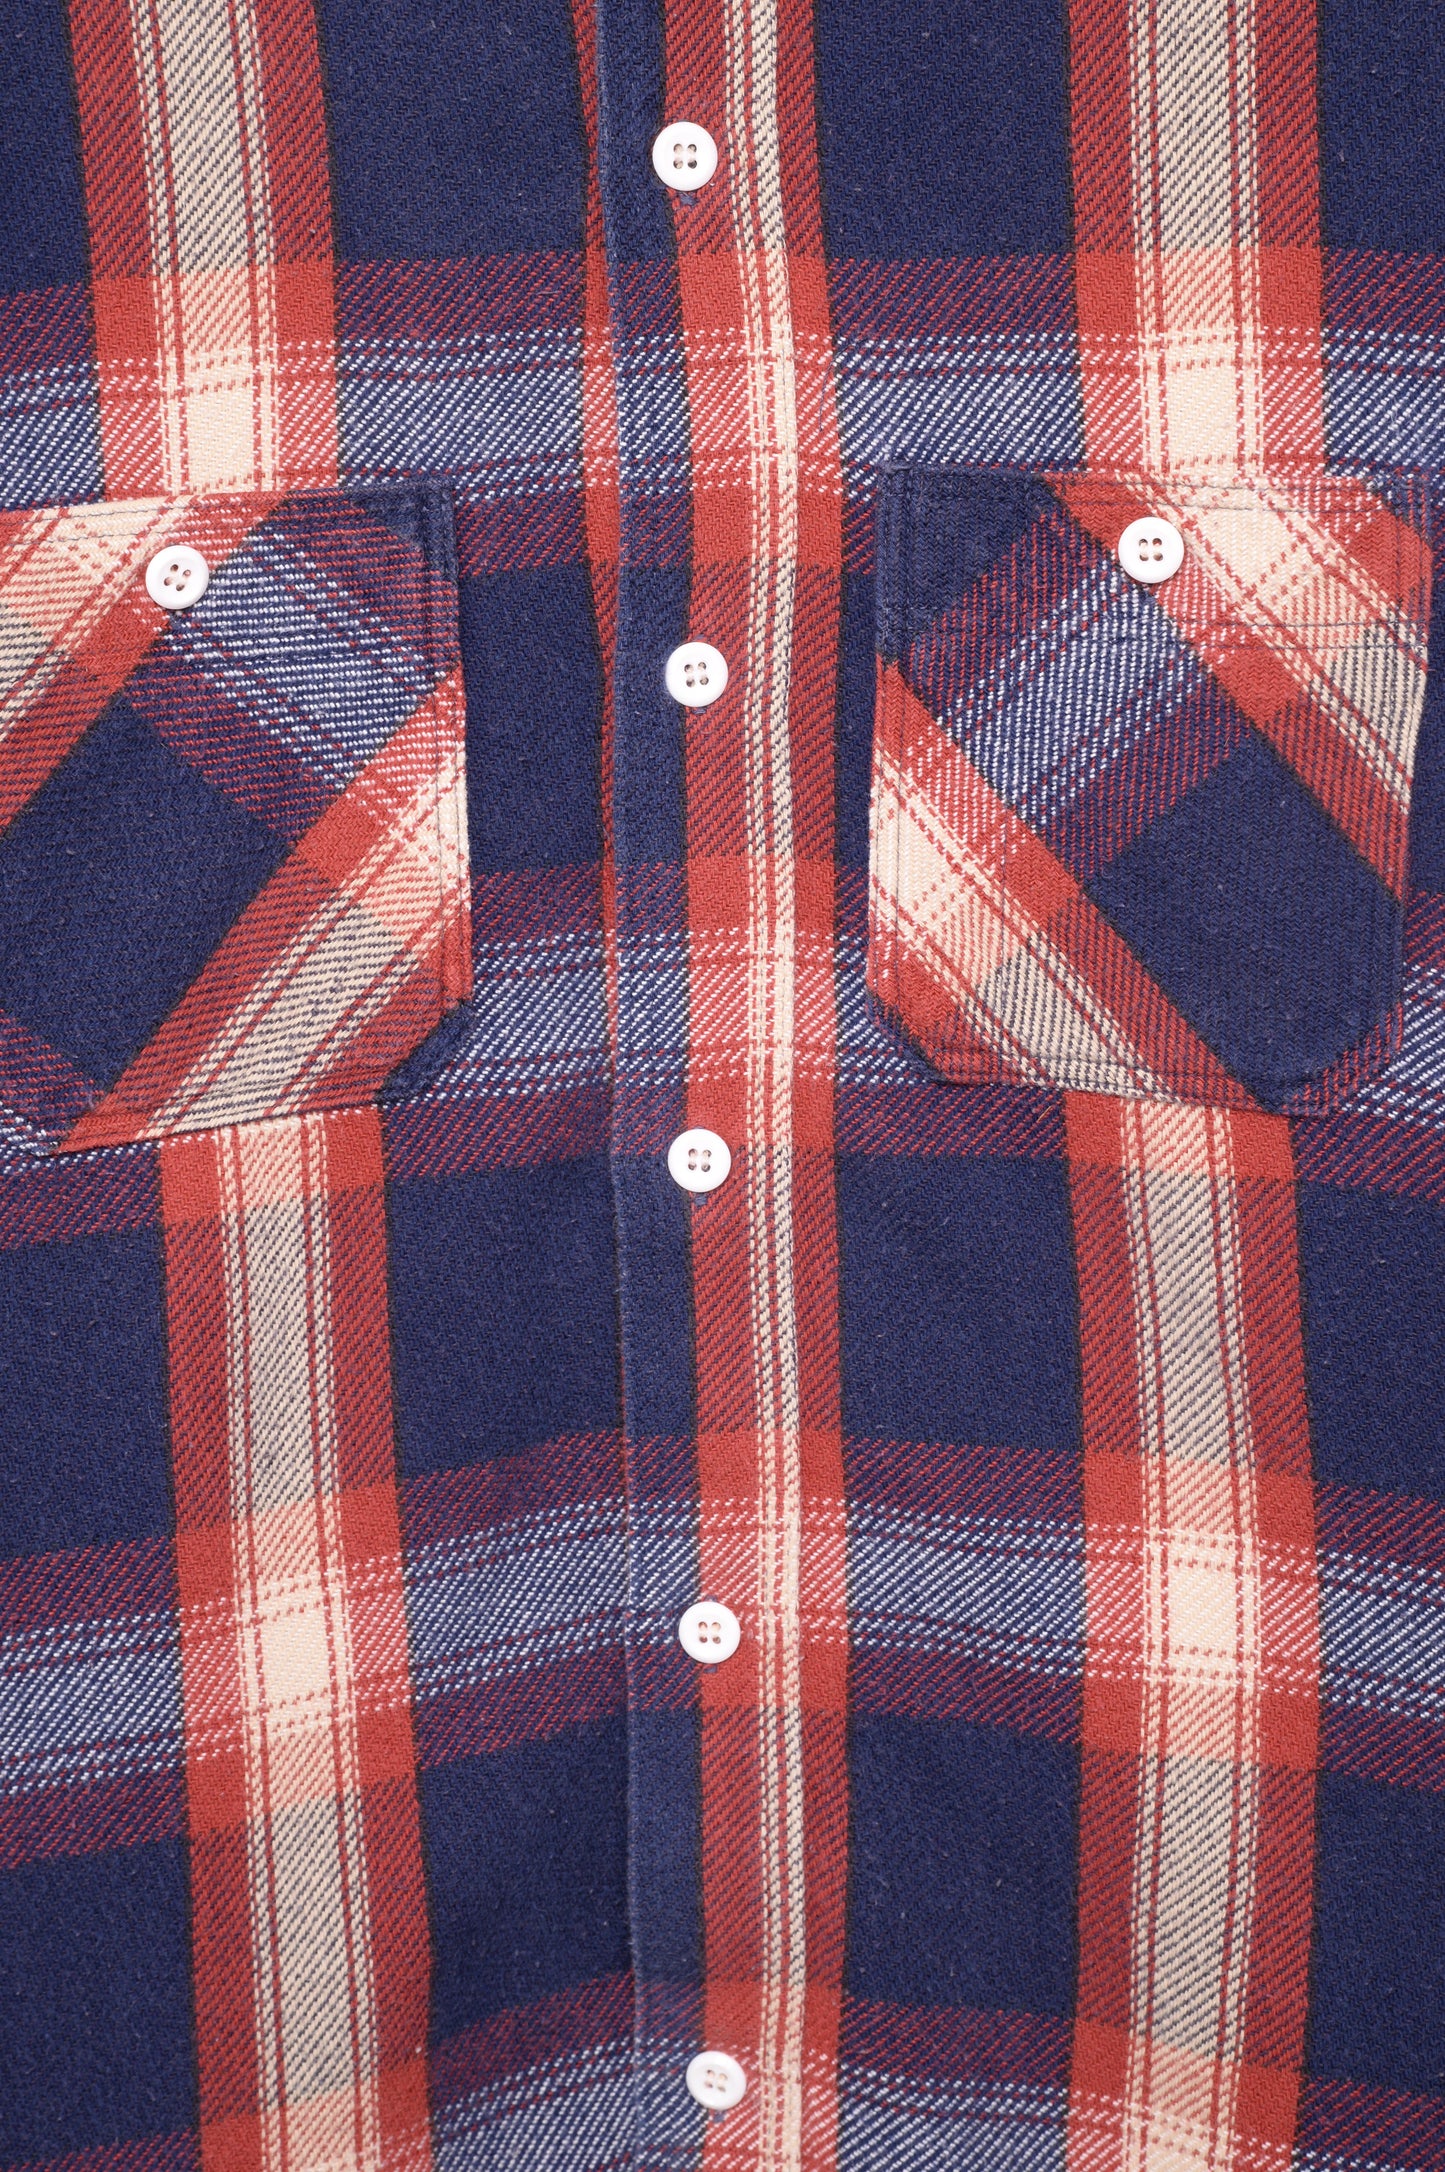 1990s Flannel Shirt